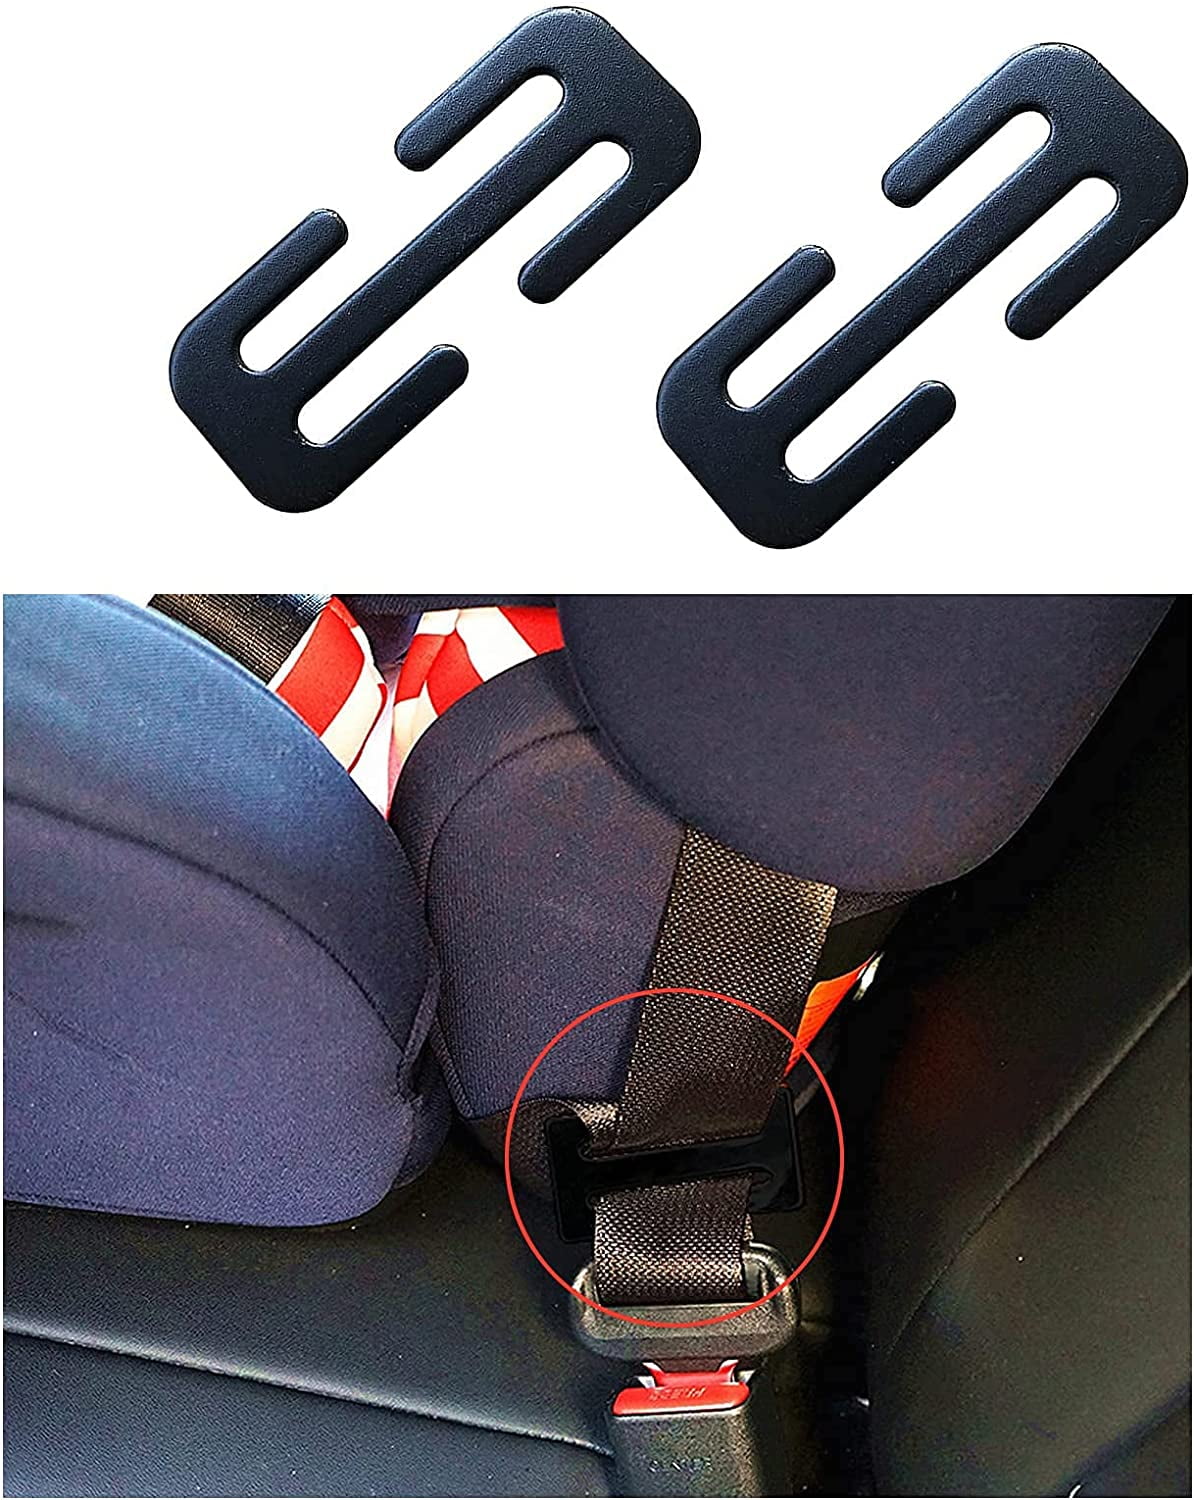 Metal Seat Belt Adjuster, Auto Shoulder Neck Strap Positioner, Universal  Vehicle Locking Clip for a Comfortable Driving (Black, 2 Pack)